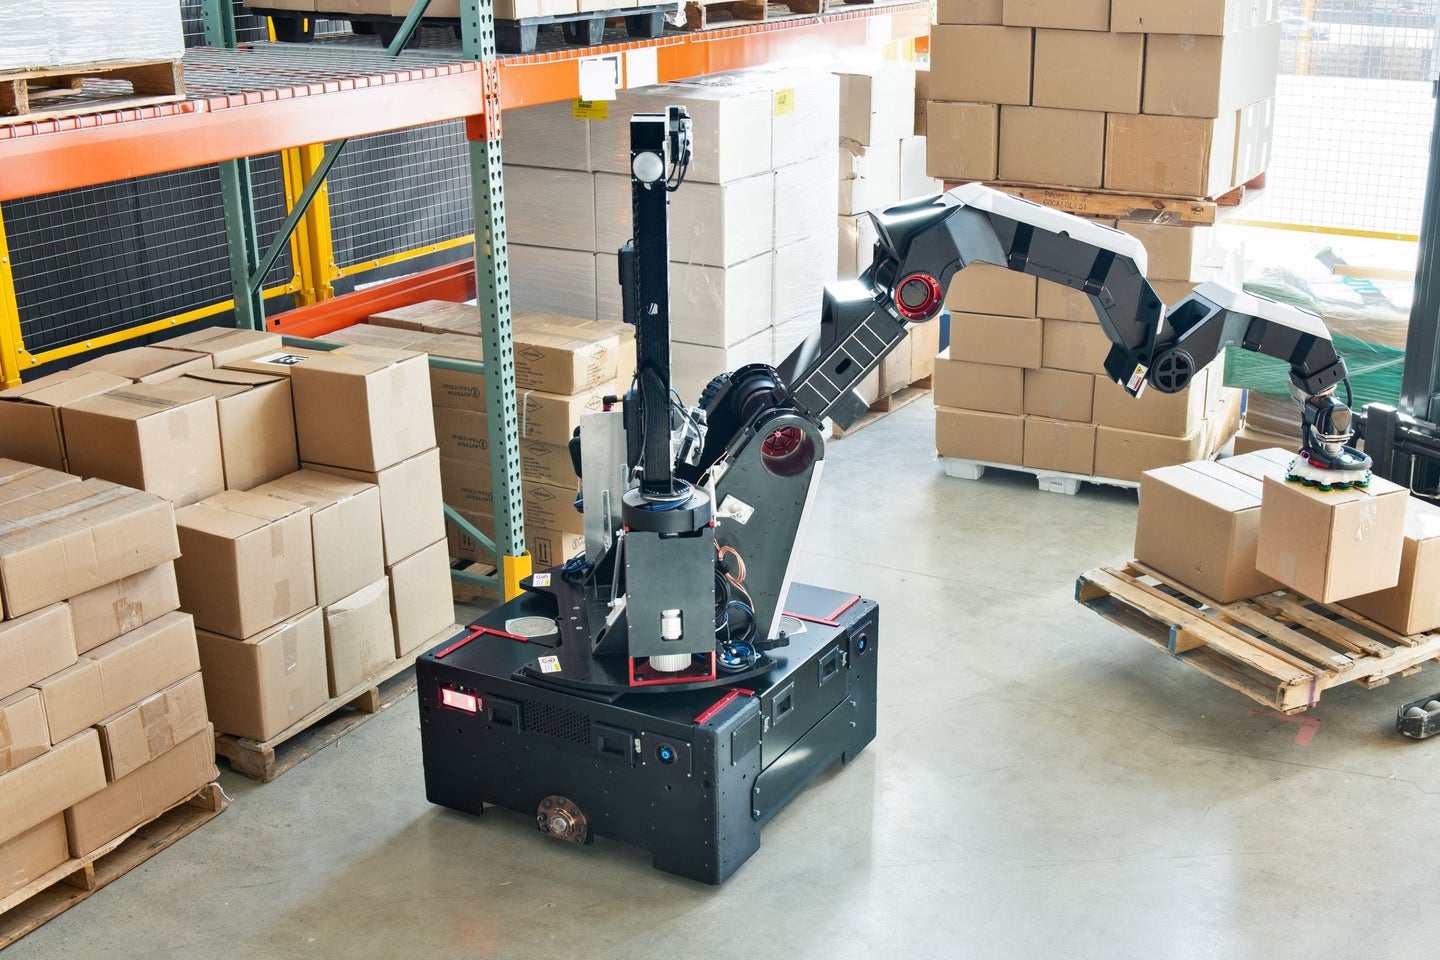 Boston Dynamics Stretch robot picking up boxes